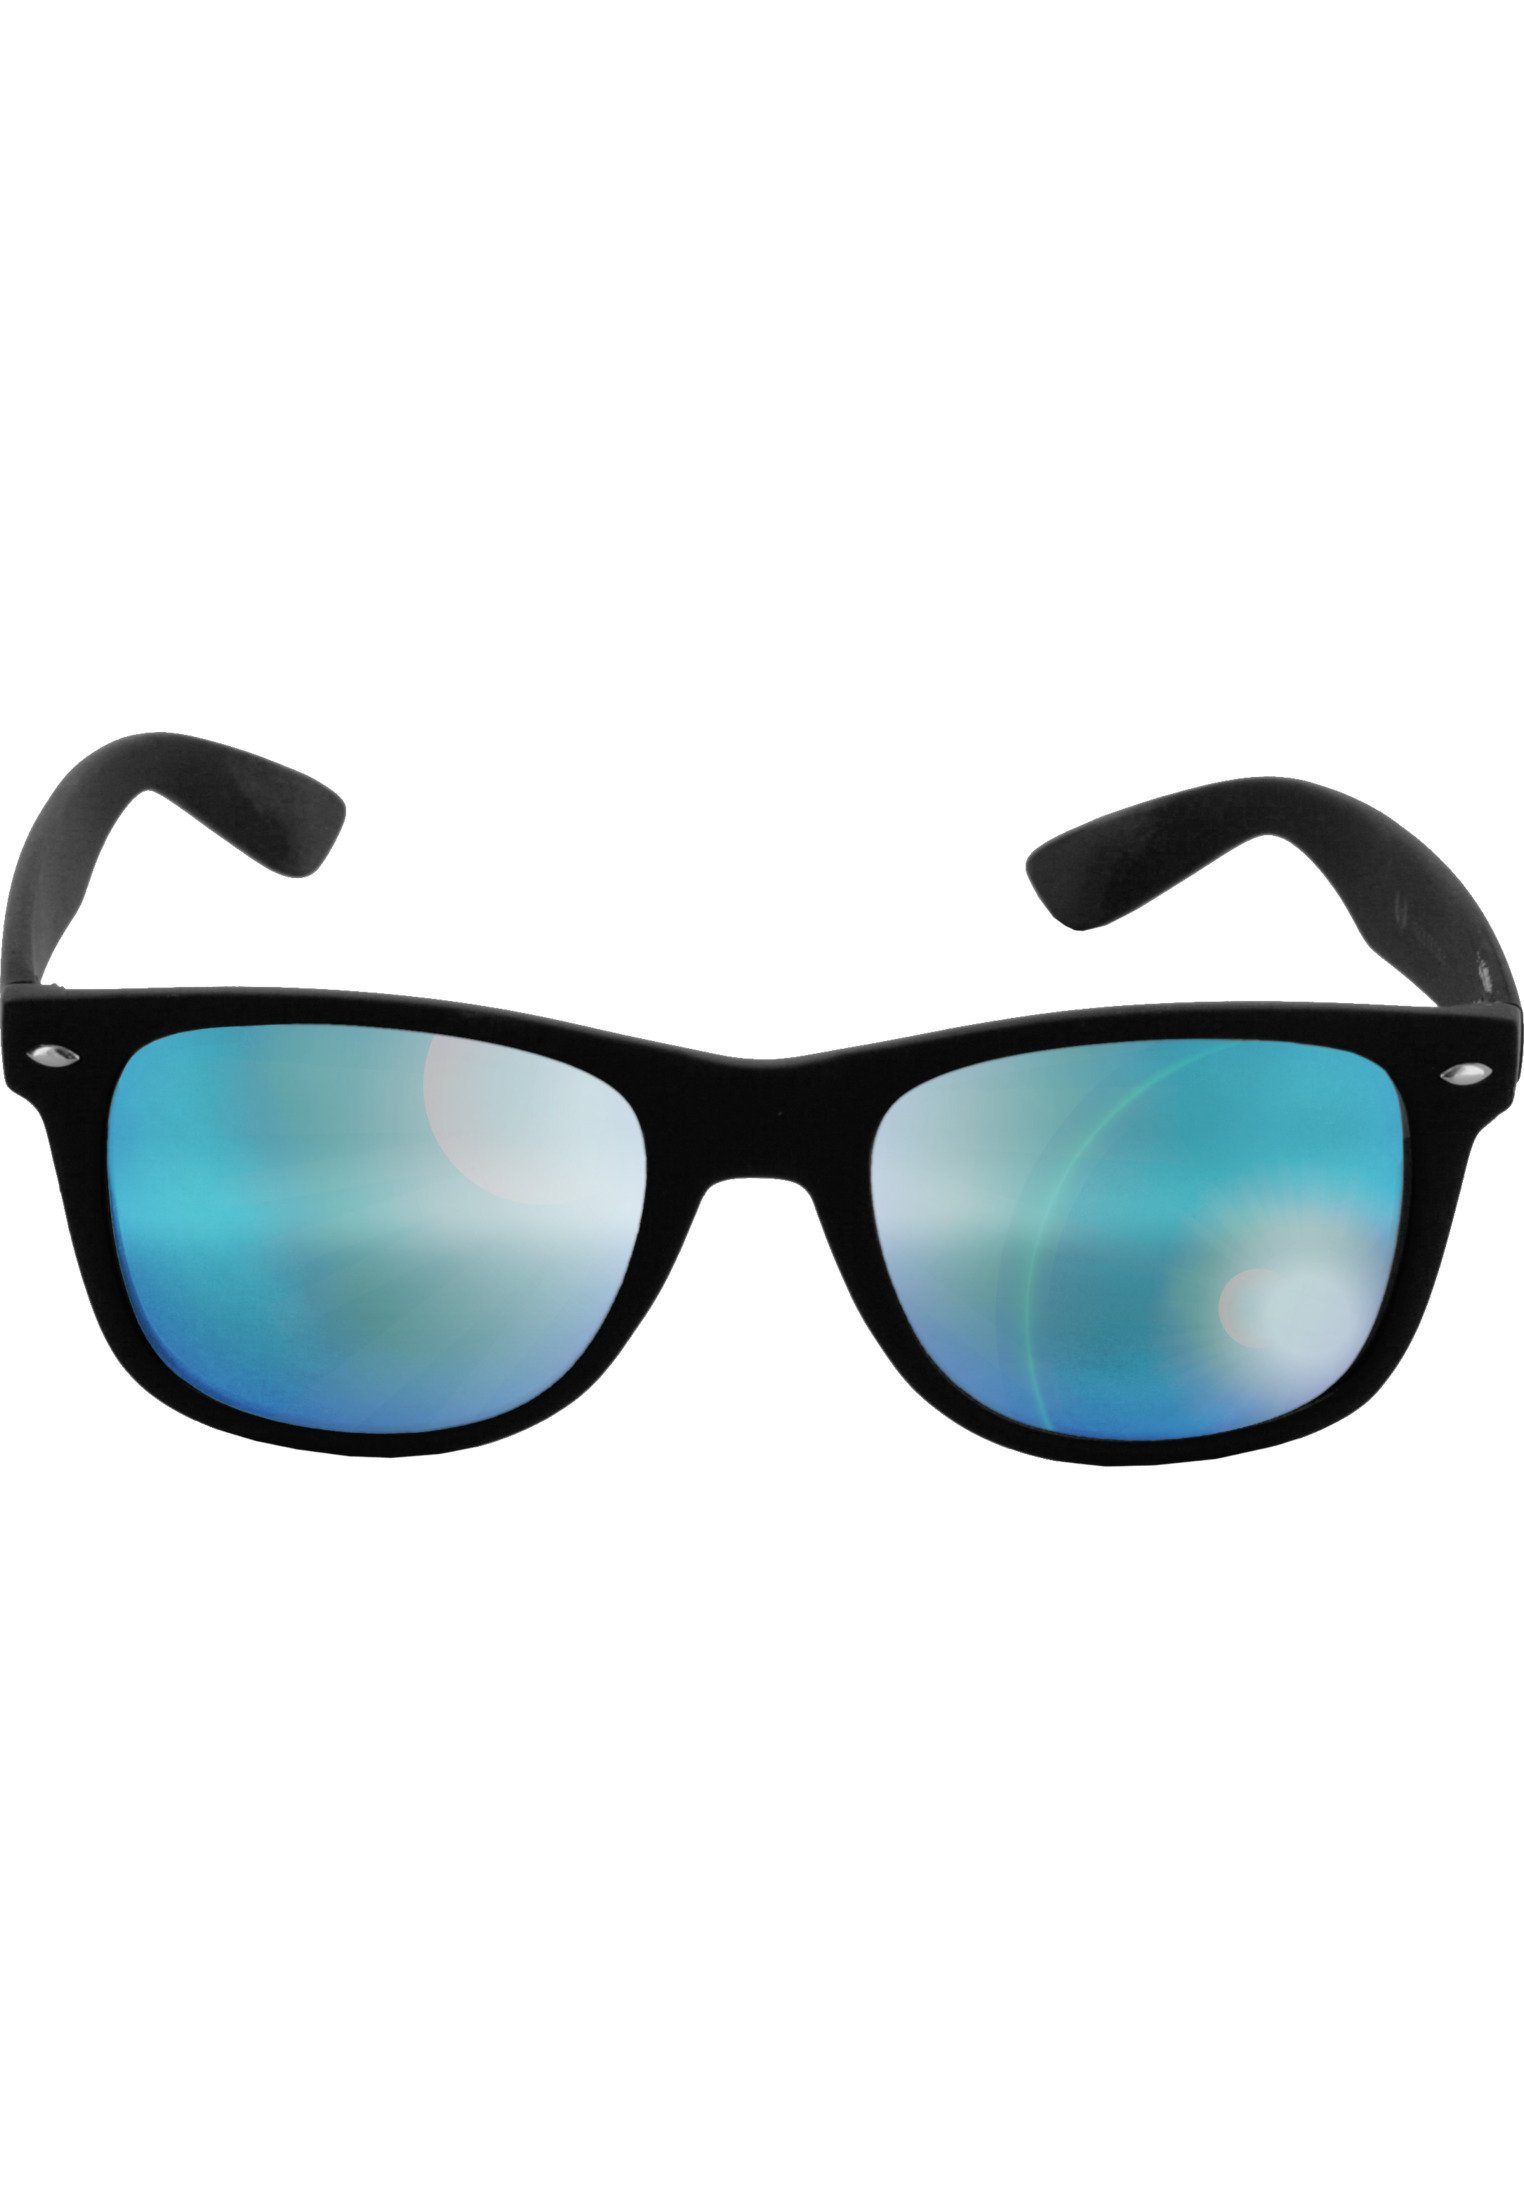 MSTRDS Sonnenbrille Accessoires Sunglasses Likoma Mirror blk/blue